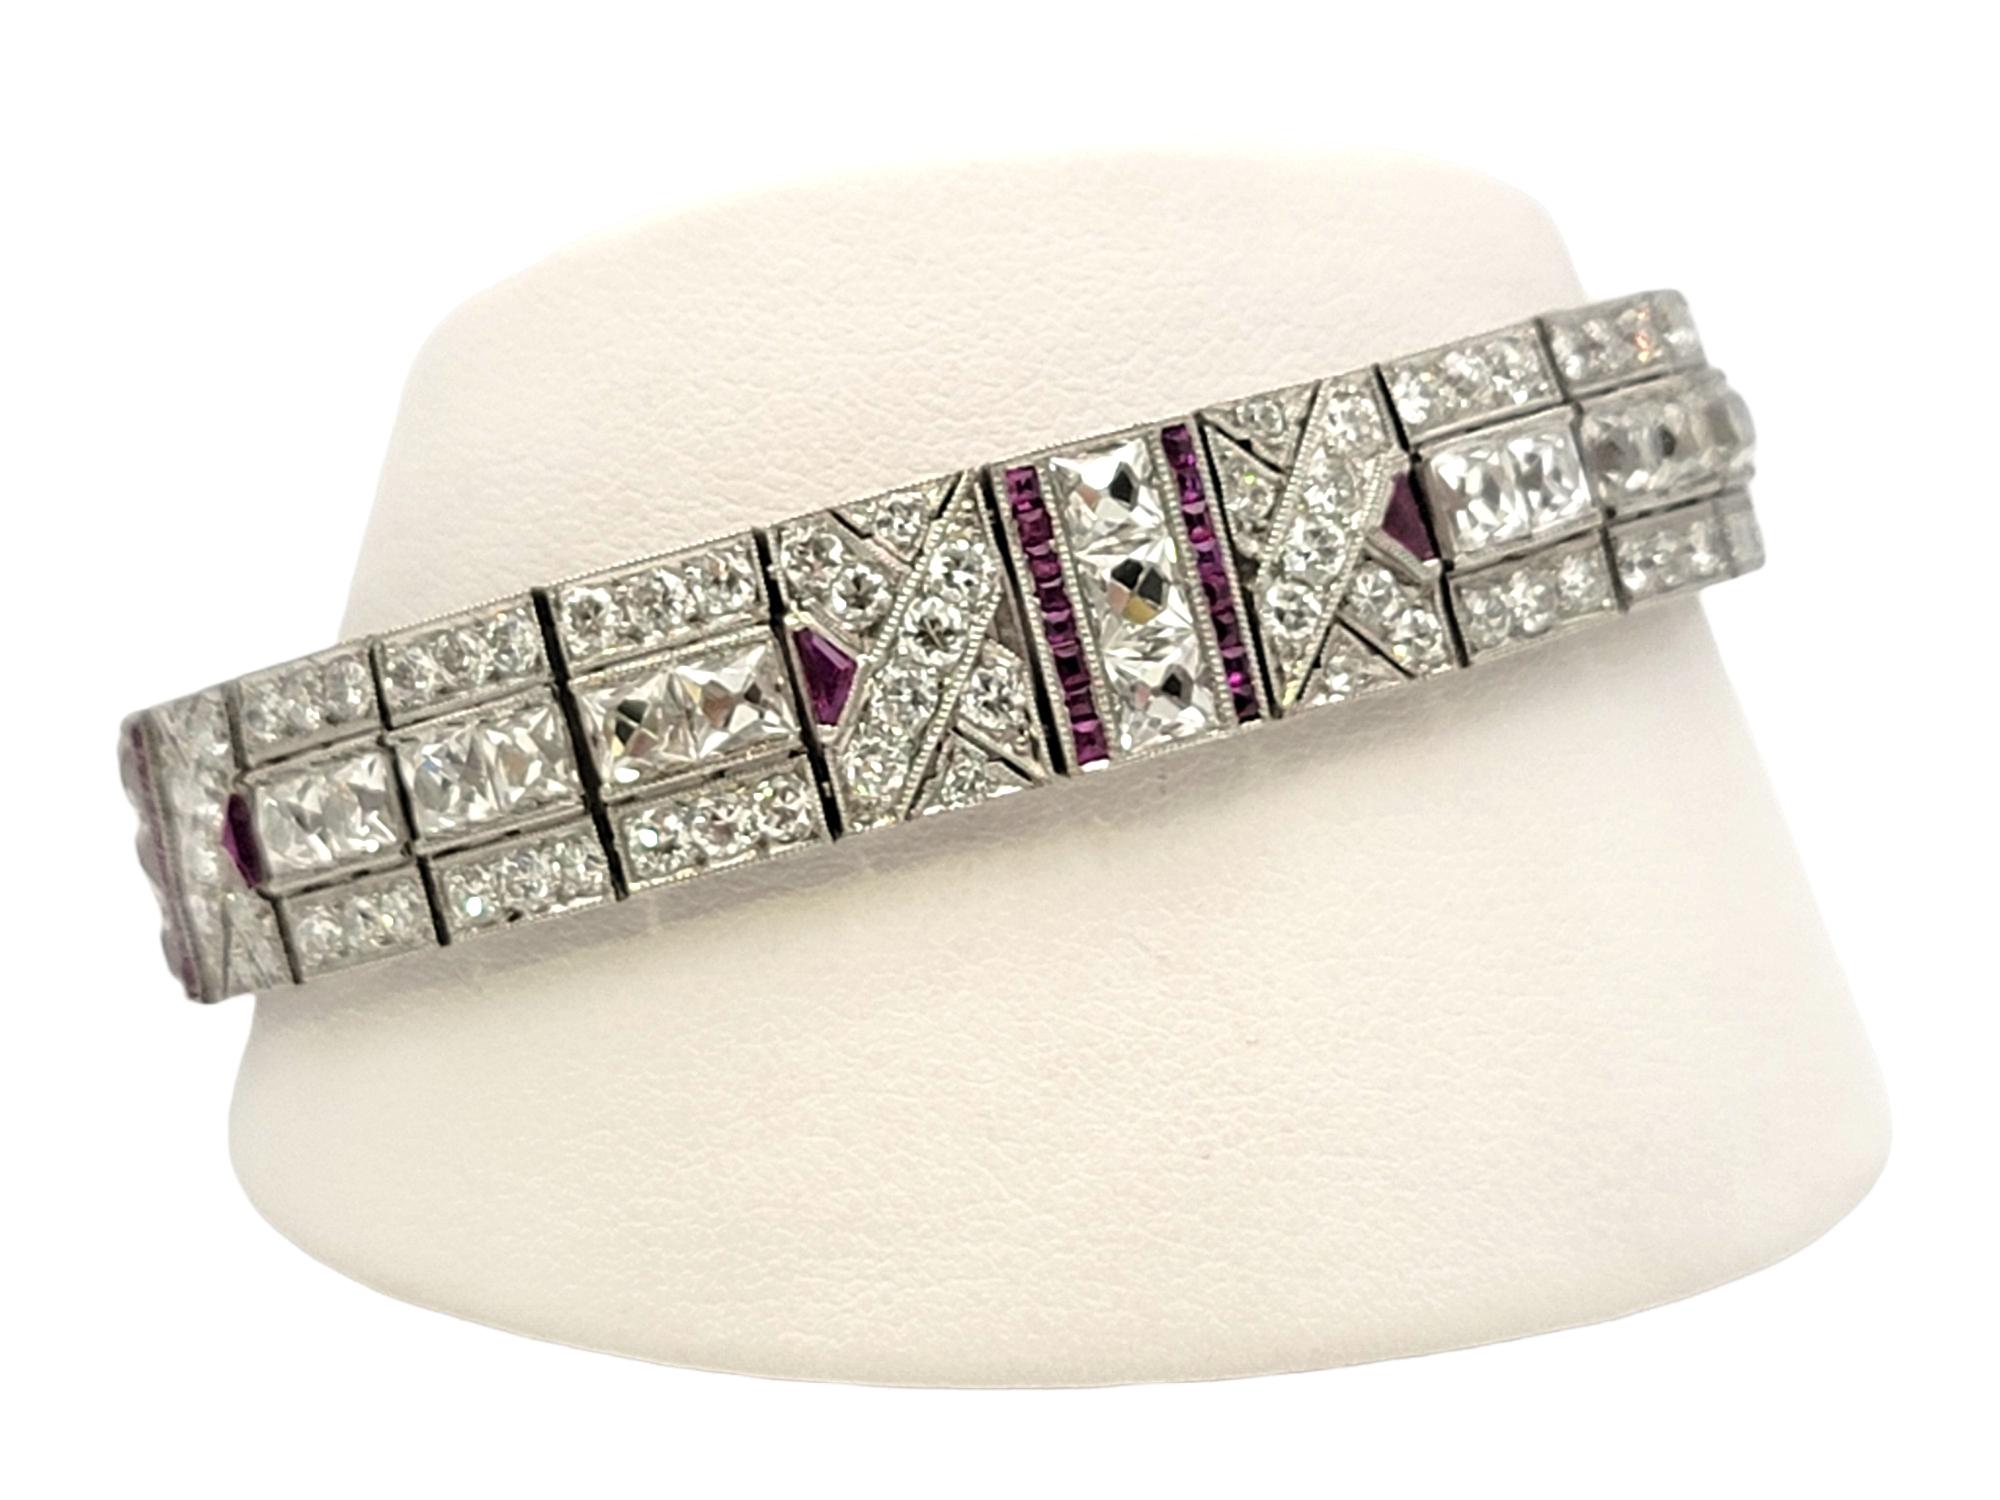 Vintage Art Deco Diamond and Ruby Bracelet 14.64 Carat Total Geometric Design For Sale 2